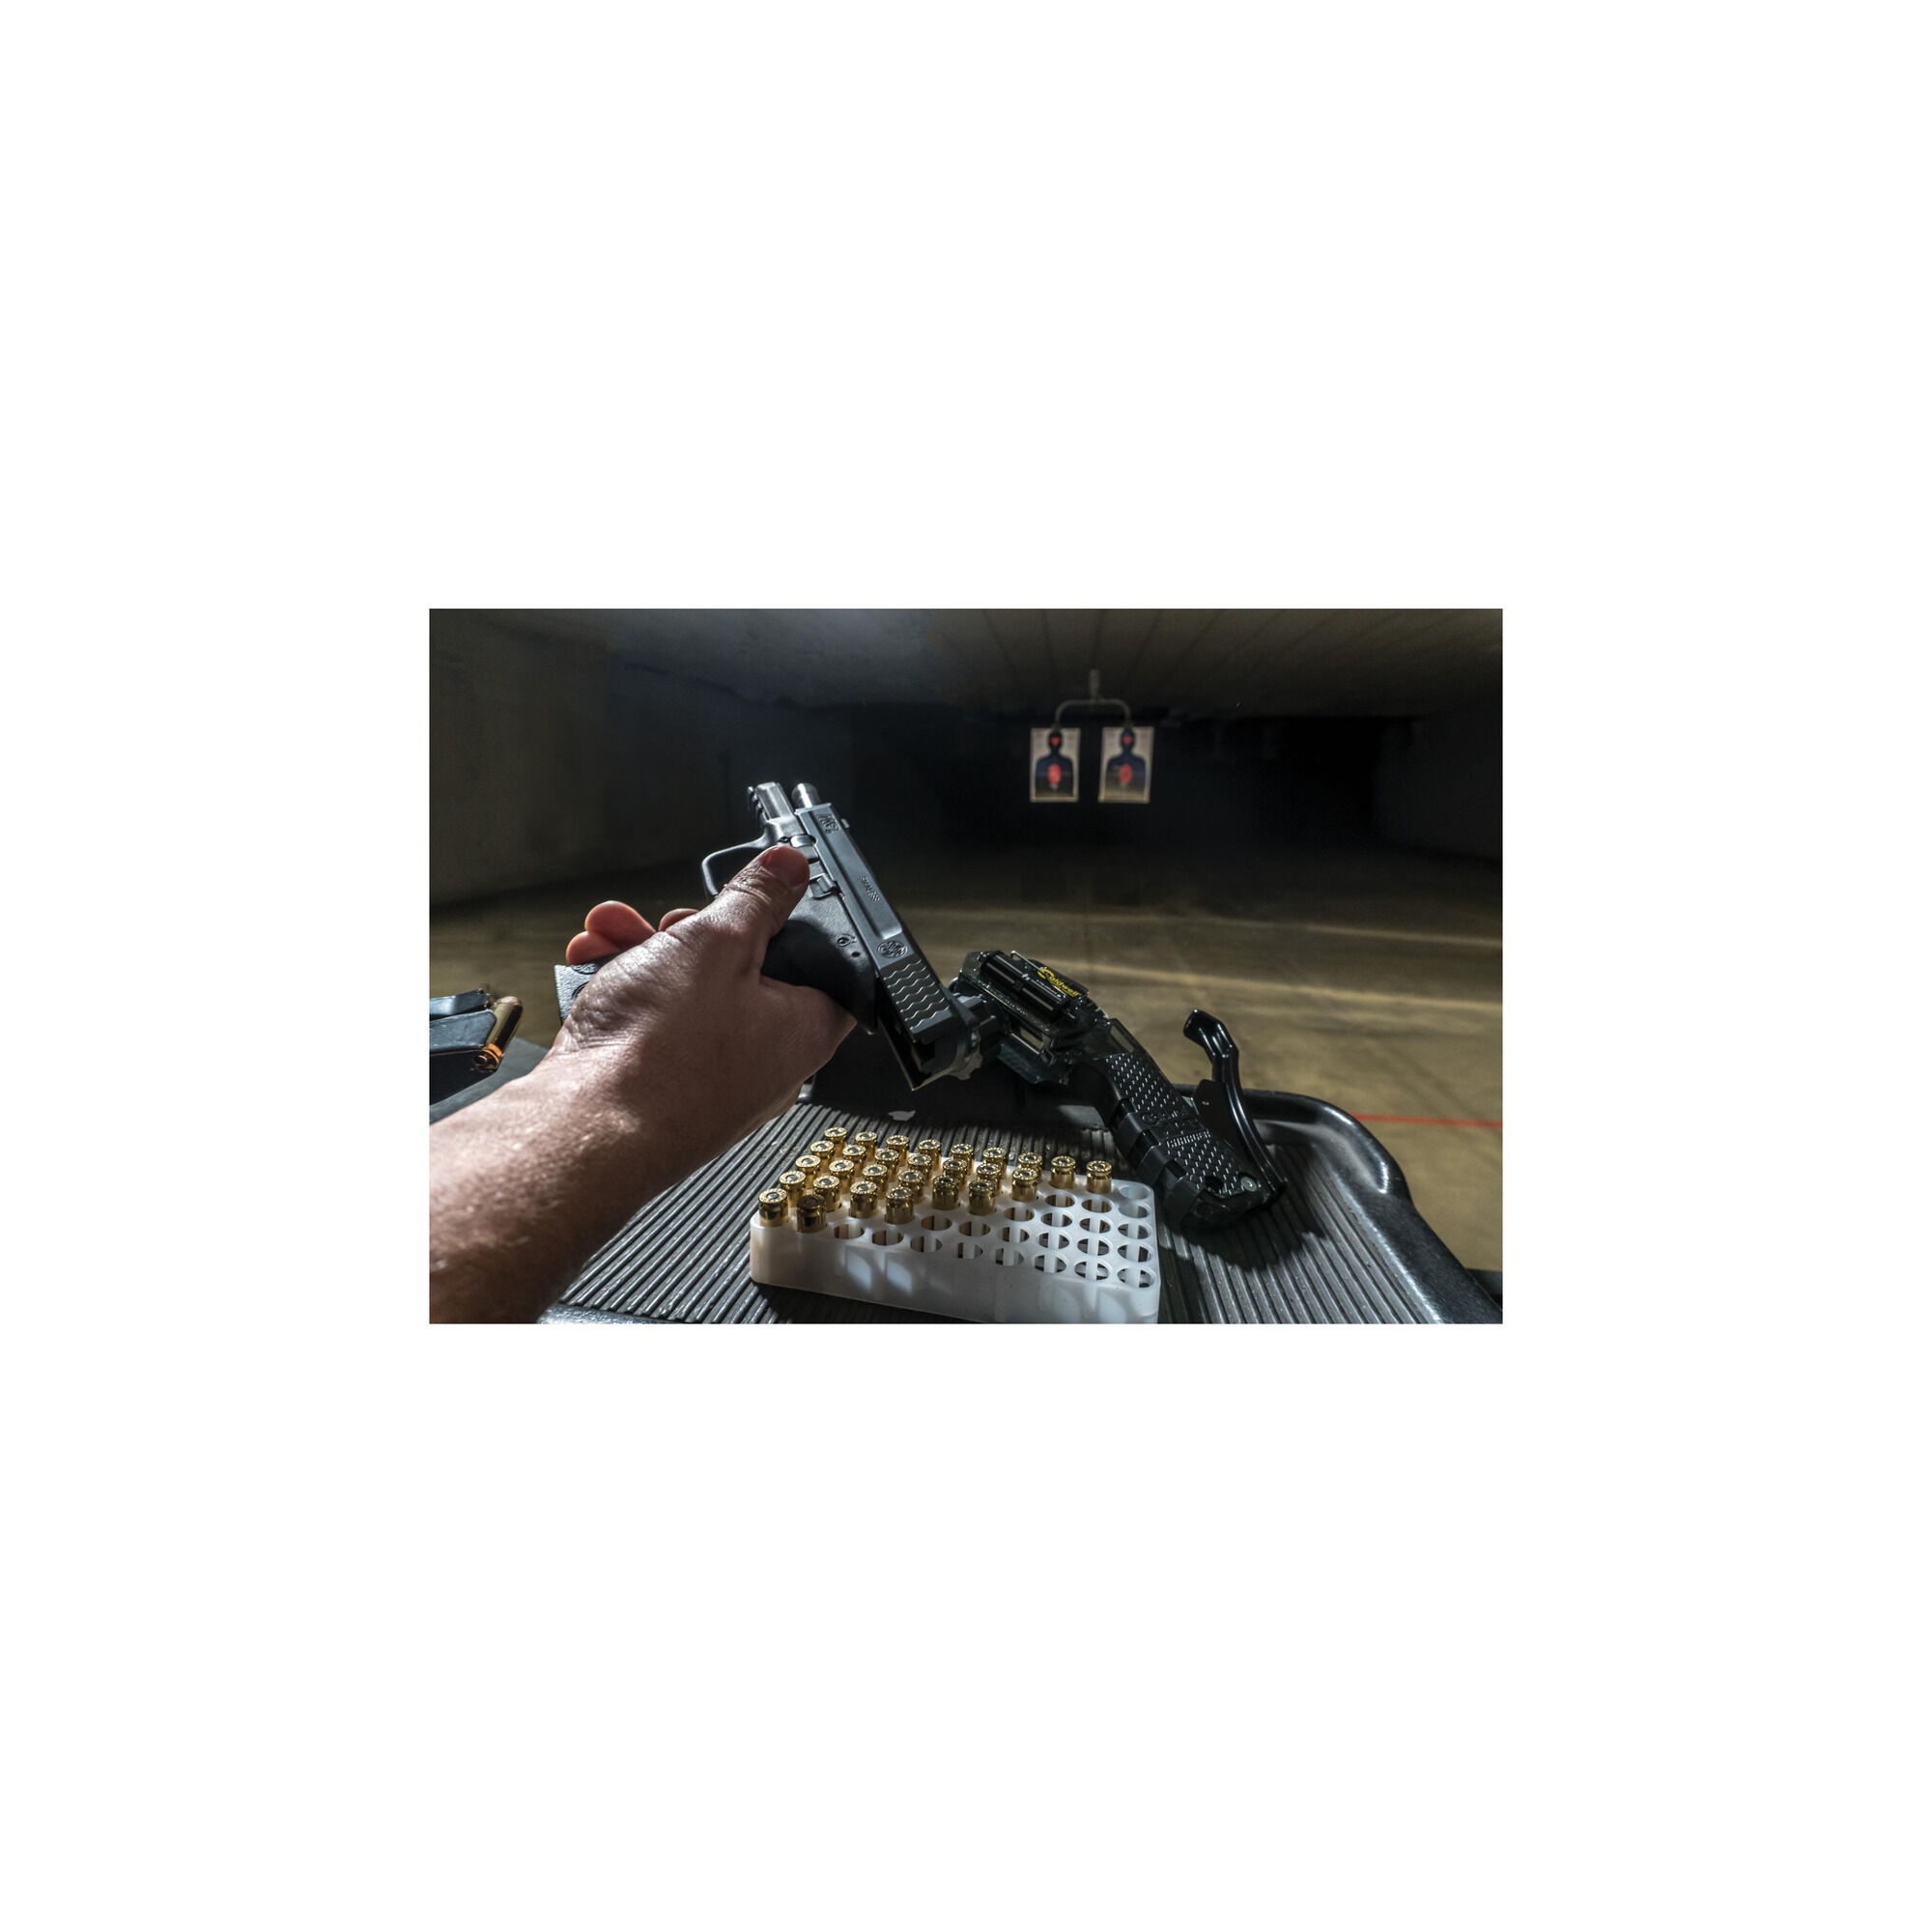 Pistol Magazine Tactical Speed Loader Glock Gun Details about   Speed loader for 9mm ammo &.40 